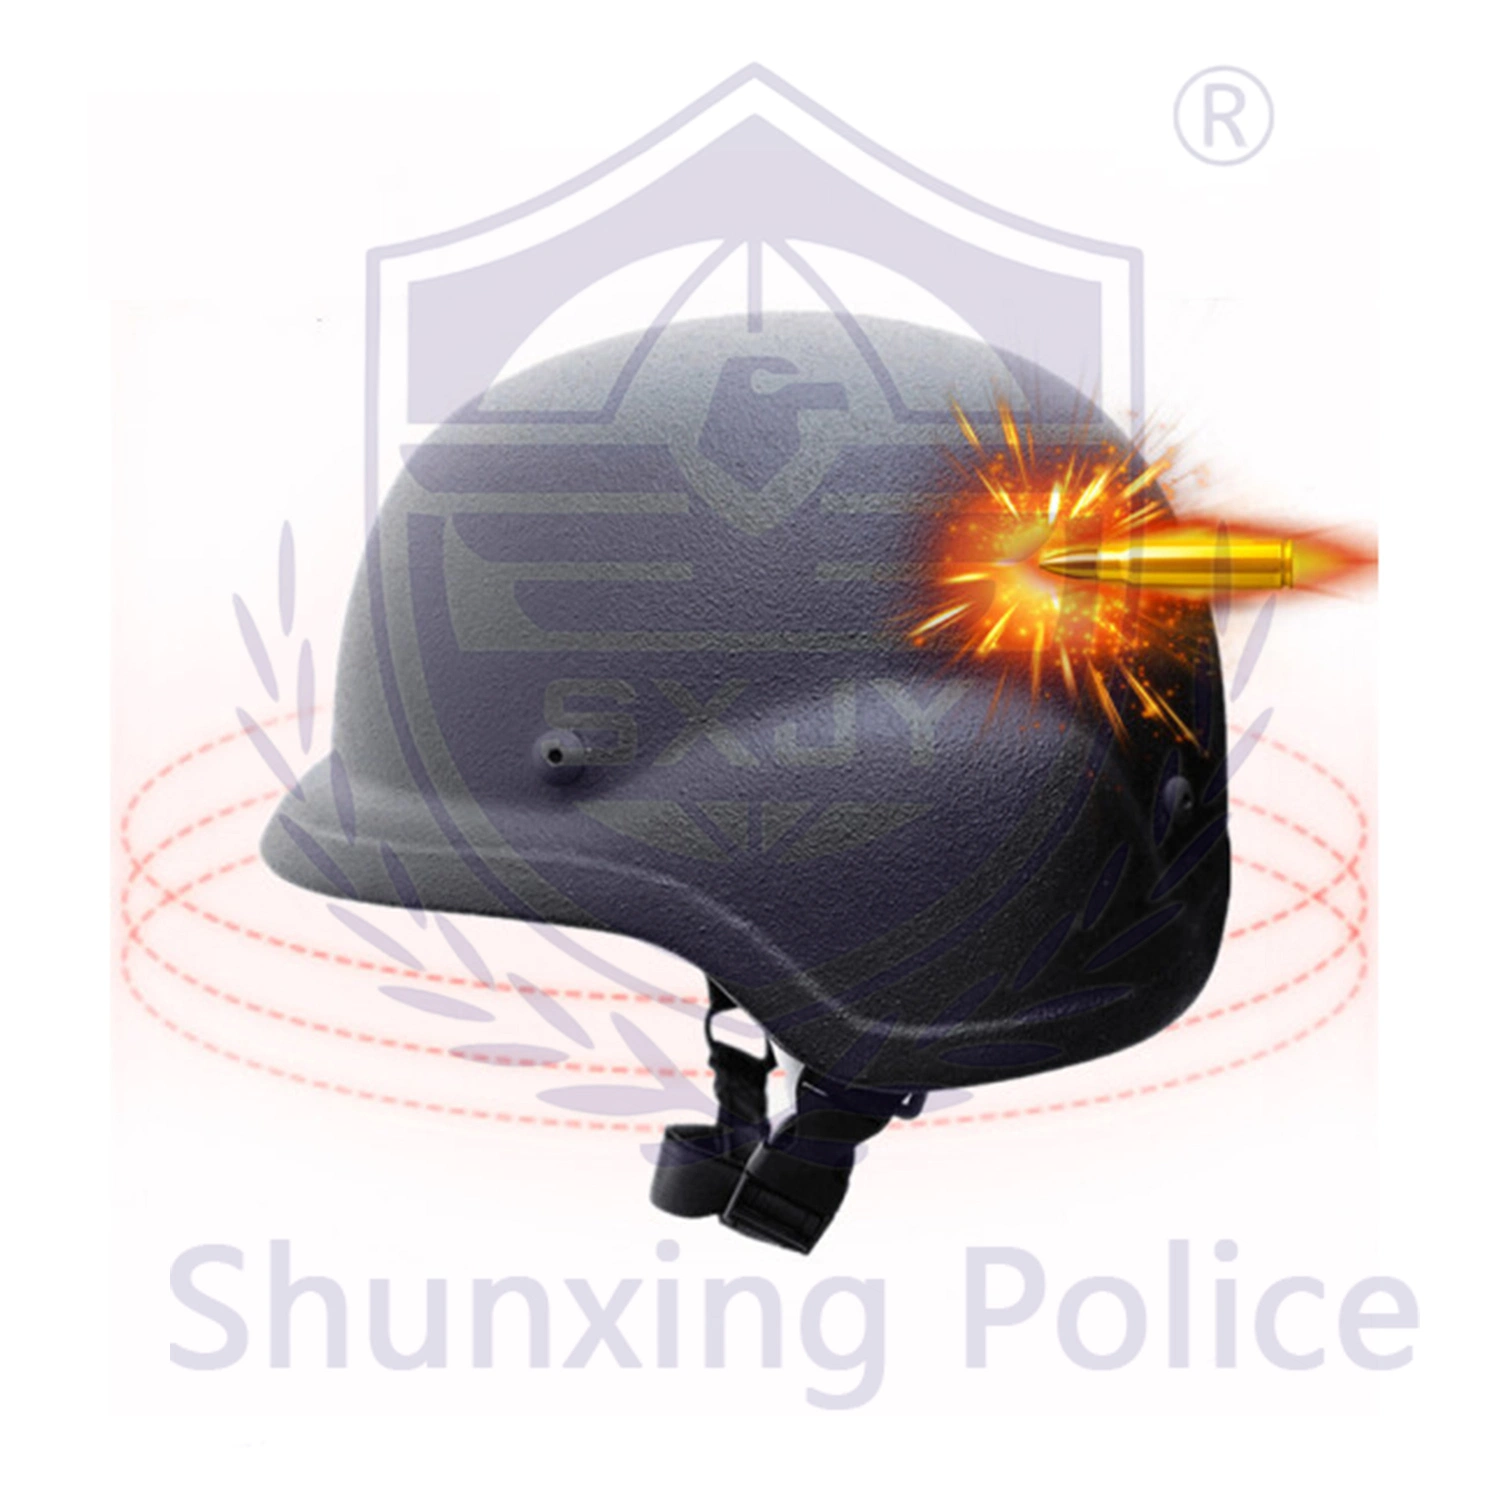 Nível 3 PE Bulletproof capacete de protecção de segurança capacete capacete tático equipamento táctico capacete